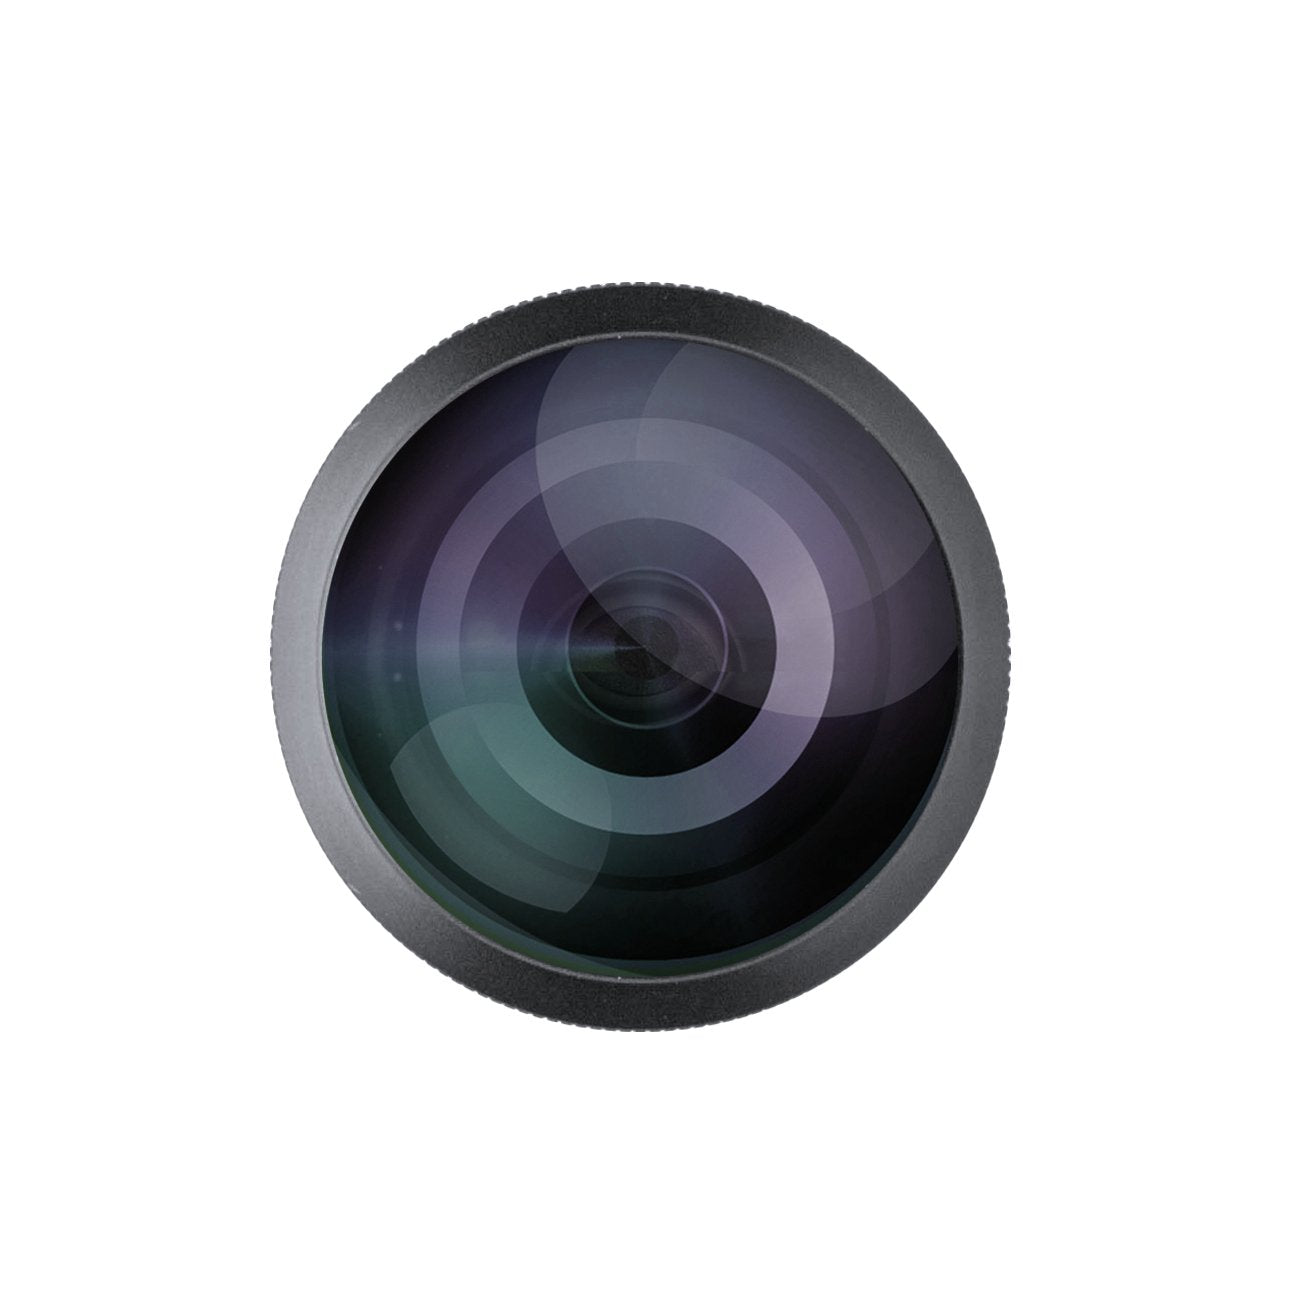 Fisheye Lens Edition - iPhone 8 Plus / 7 Plus - SANDMARC